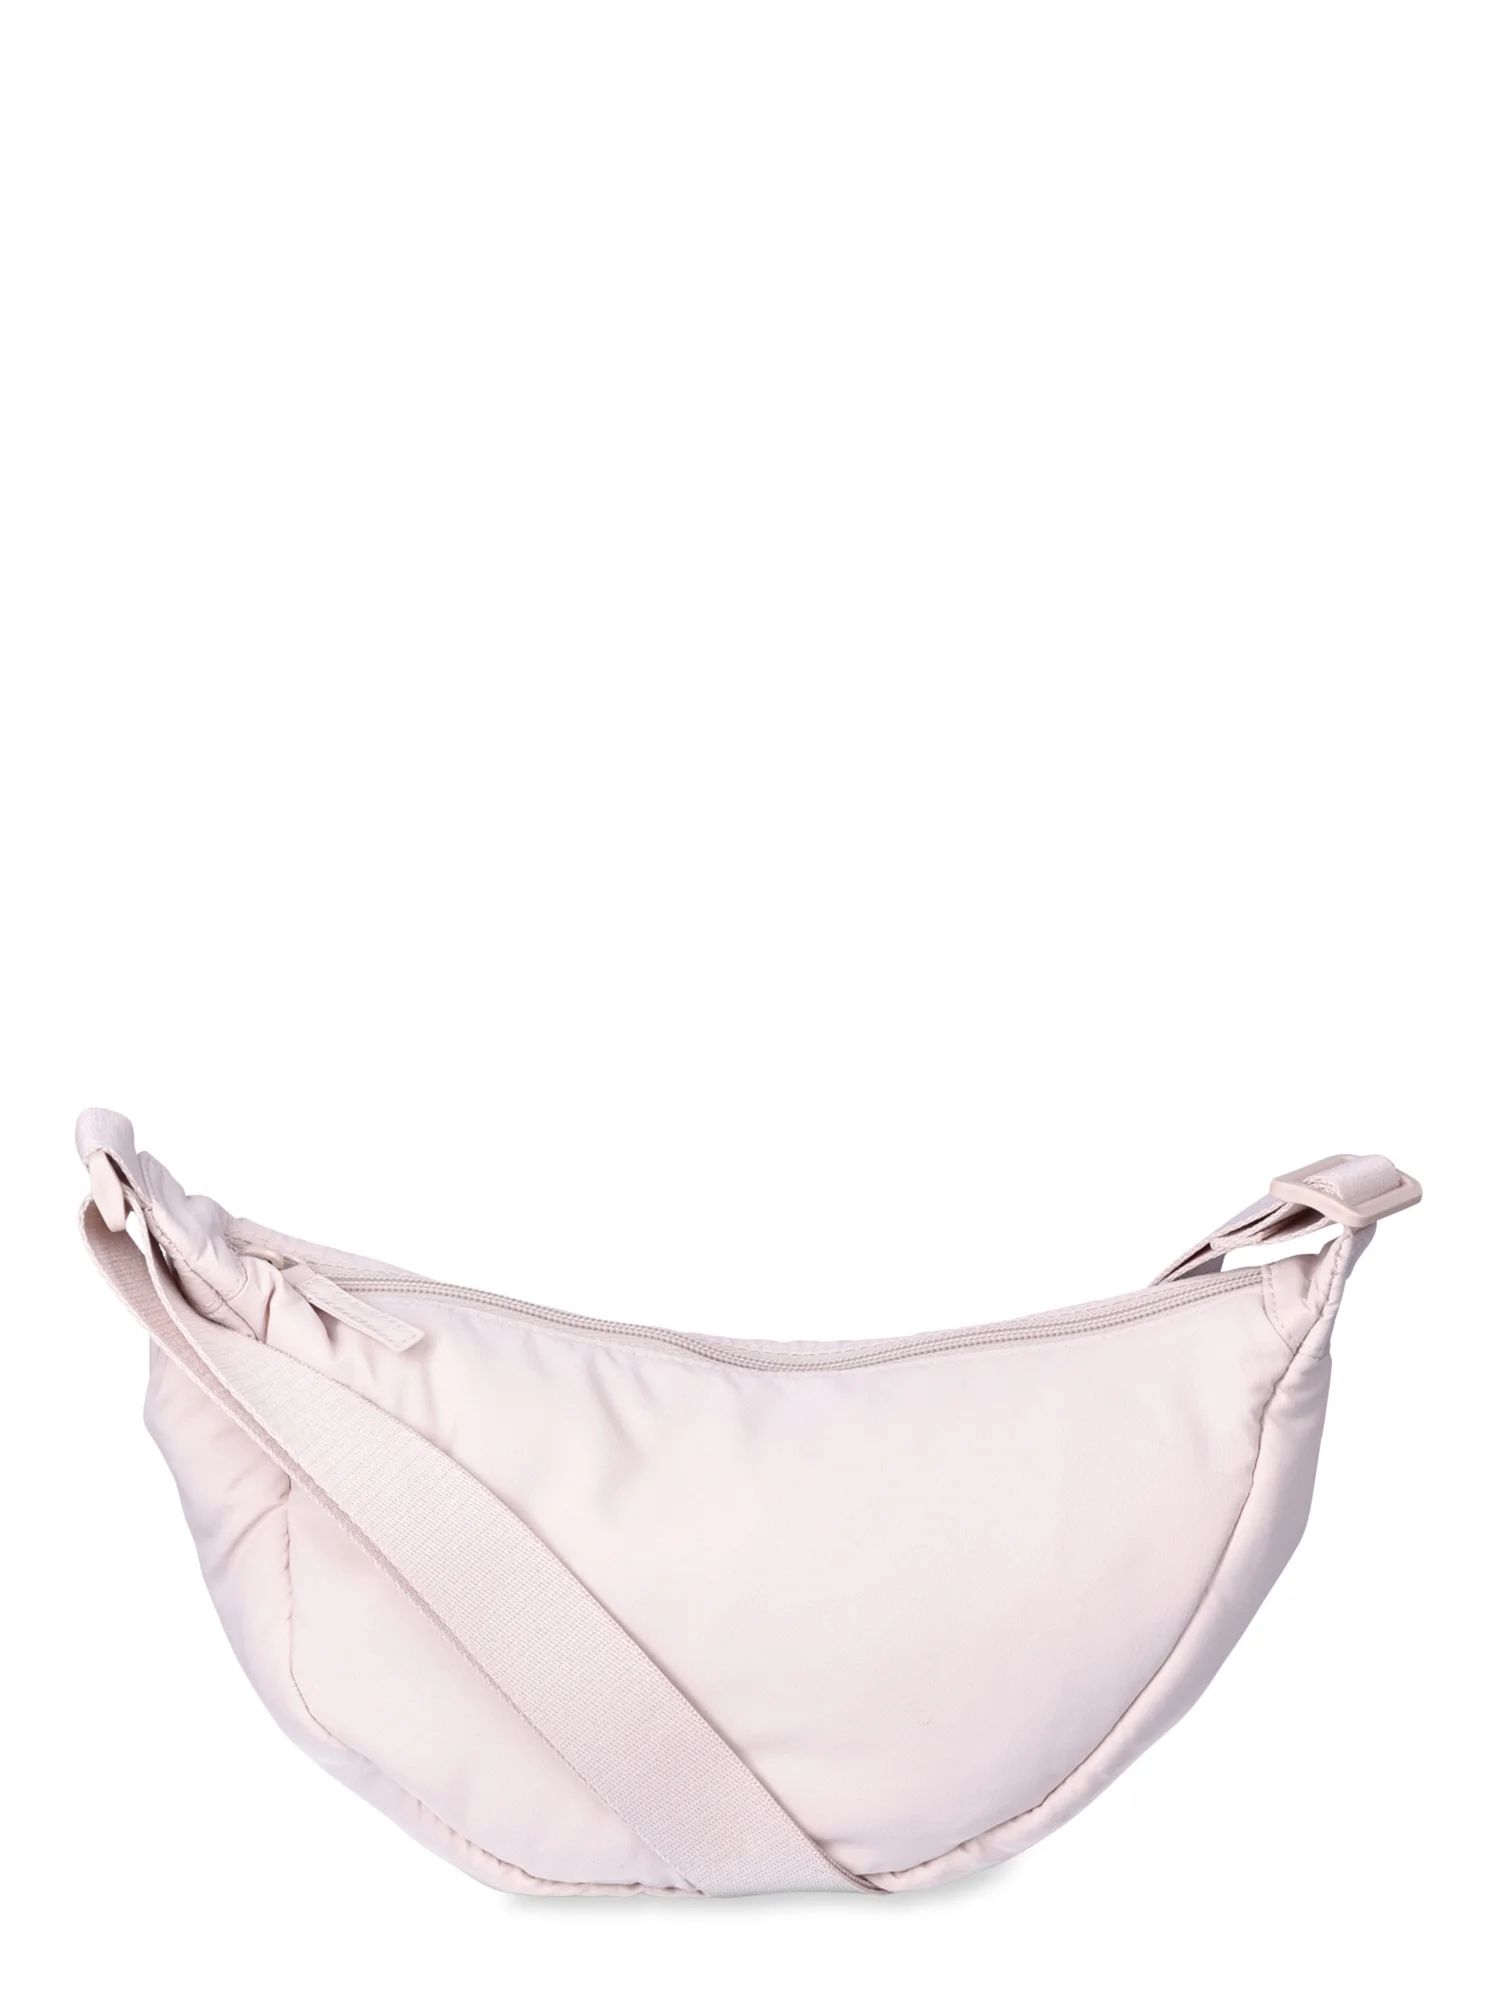 No Boundaries Women's Hands Free Hobo Bag, Cream | Walmart (US)